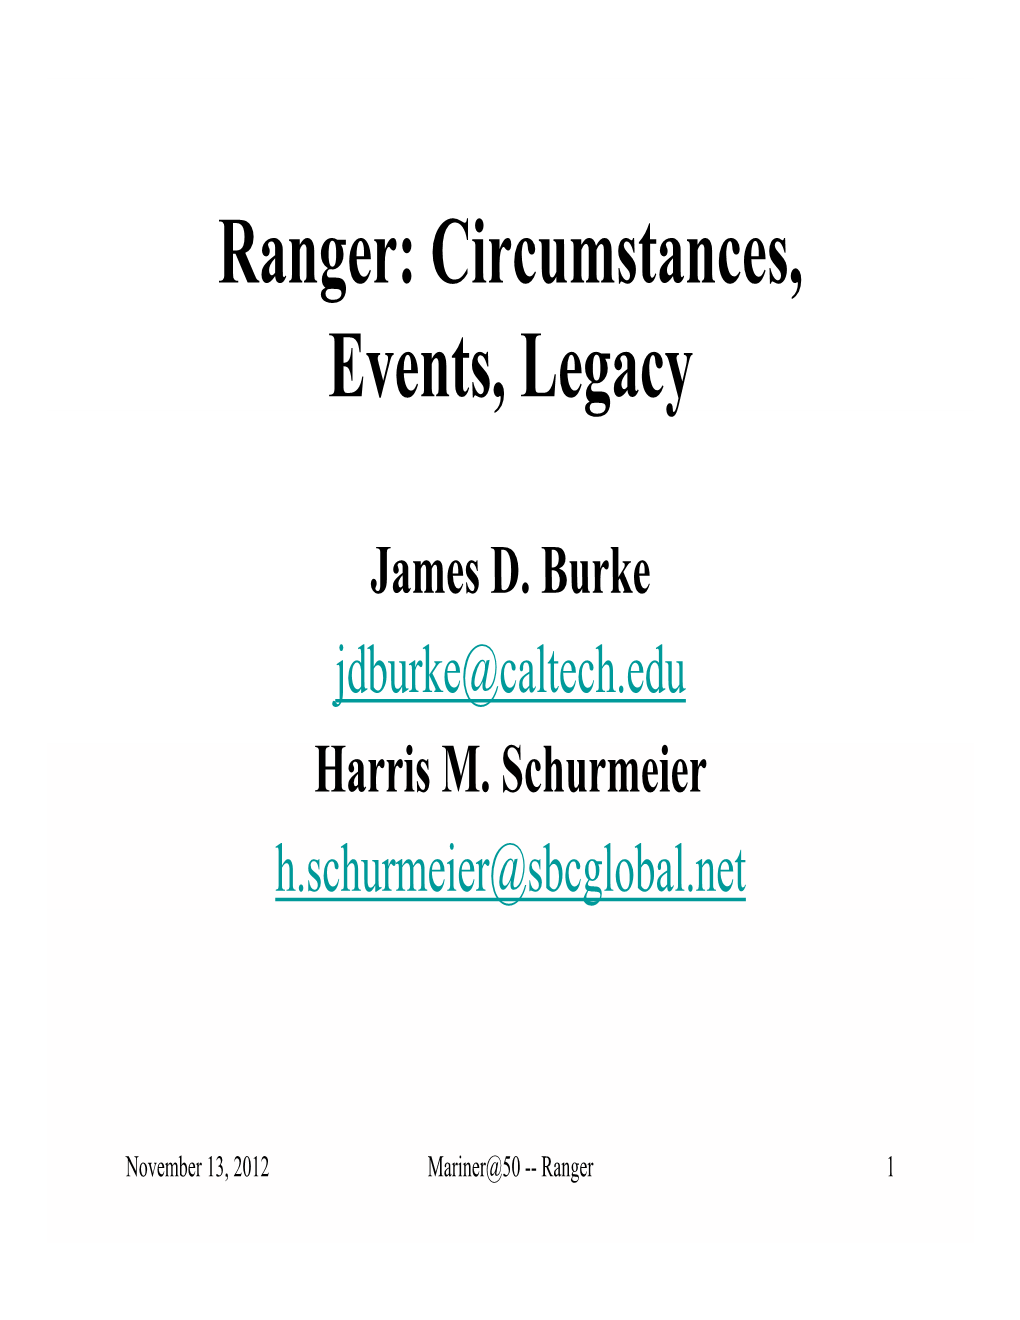 Circumstances, Events, Legacy